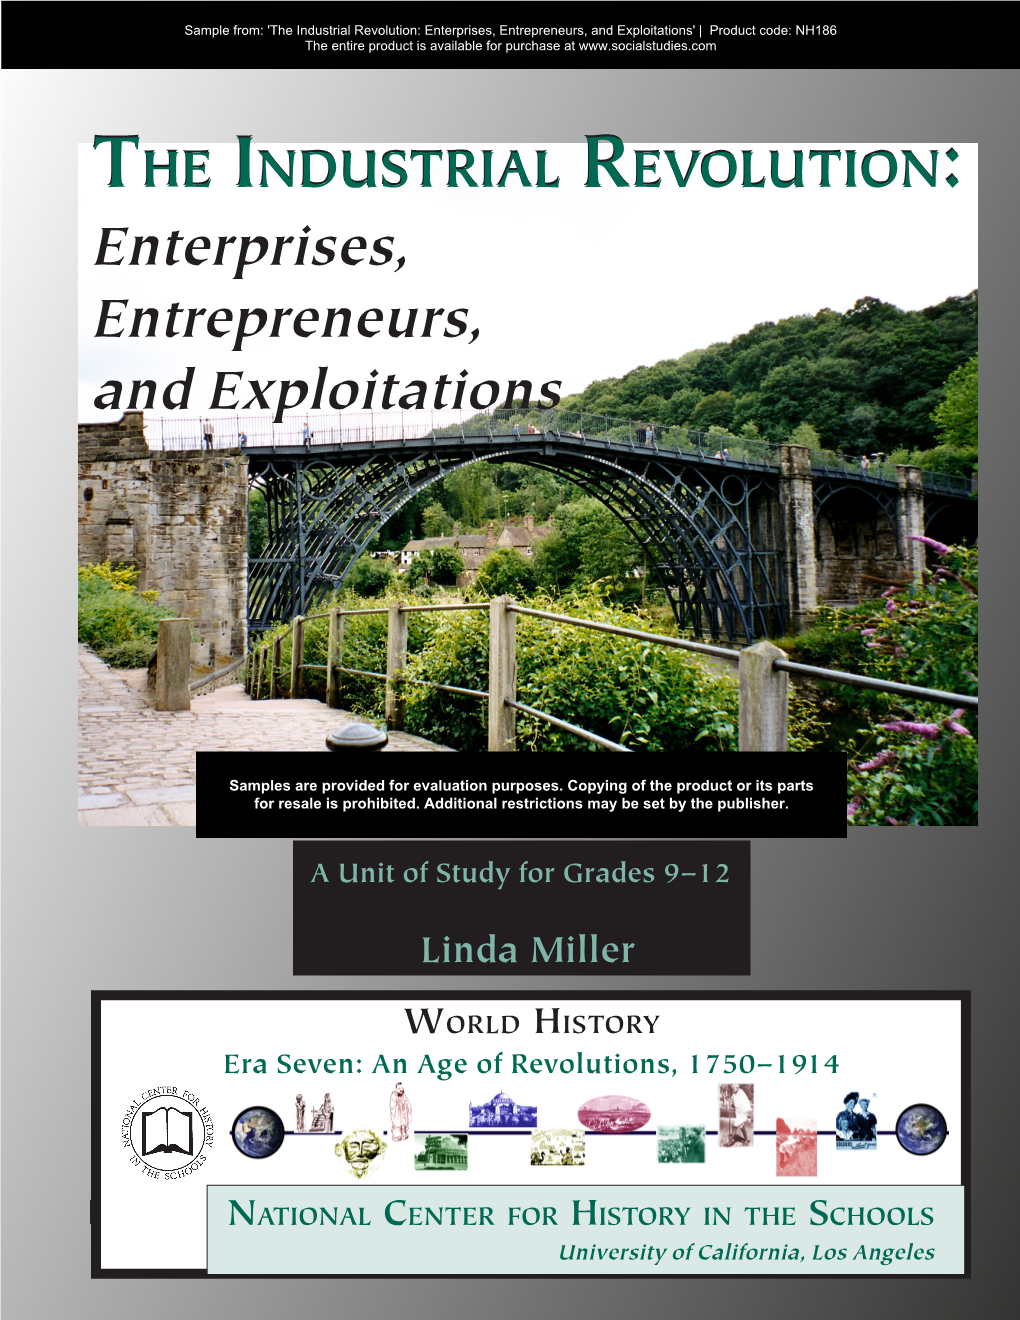 Enterprises, Entrepreneurs, and Exploitations